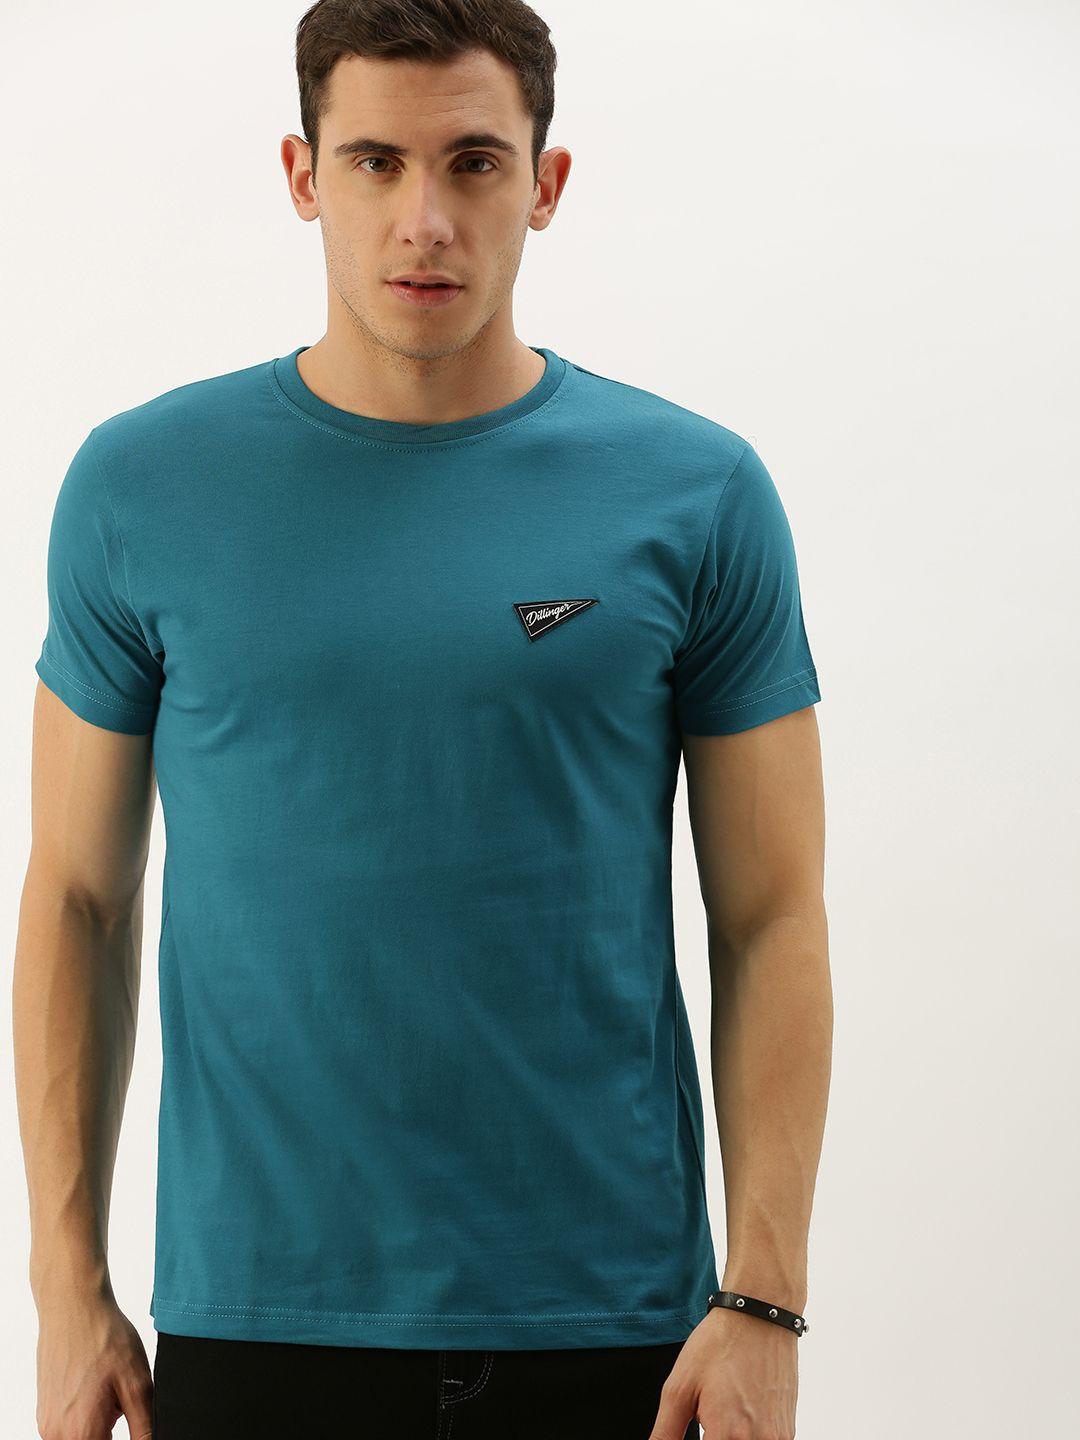 dillinger-men-teal-blue-solid-round-neck-pure-cotton-t-shirt